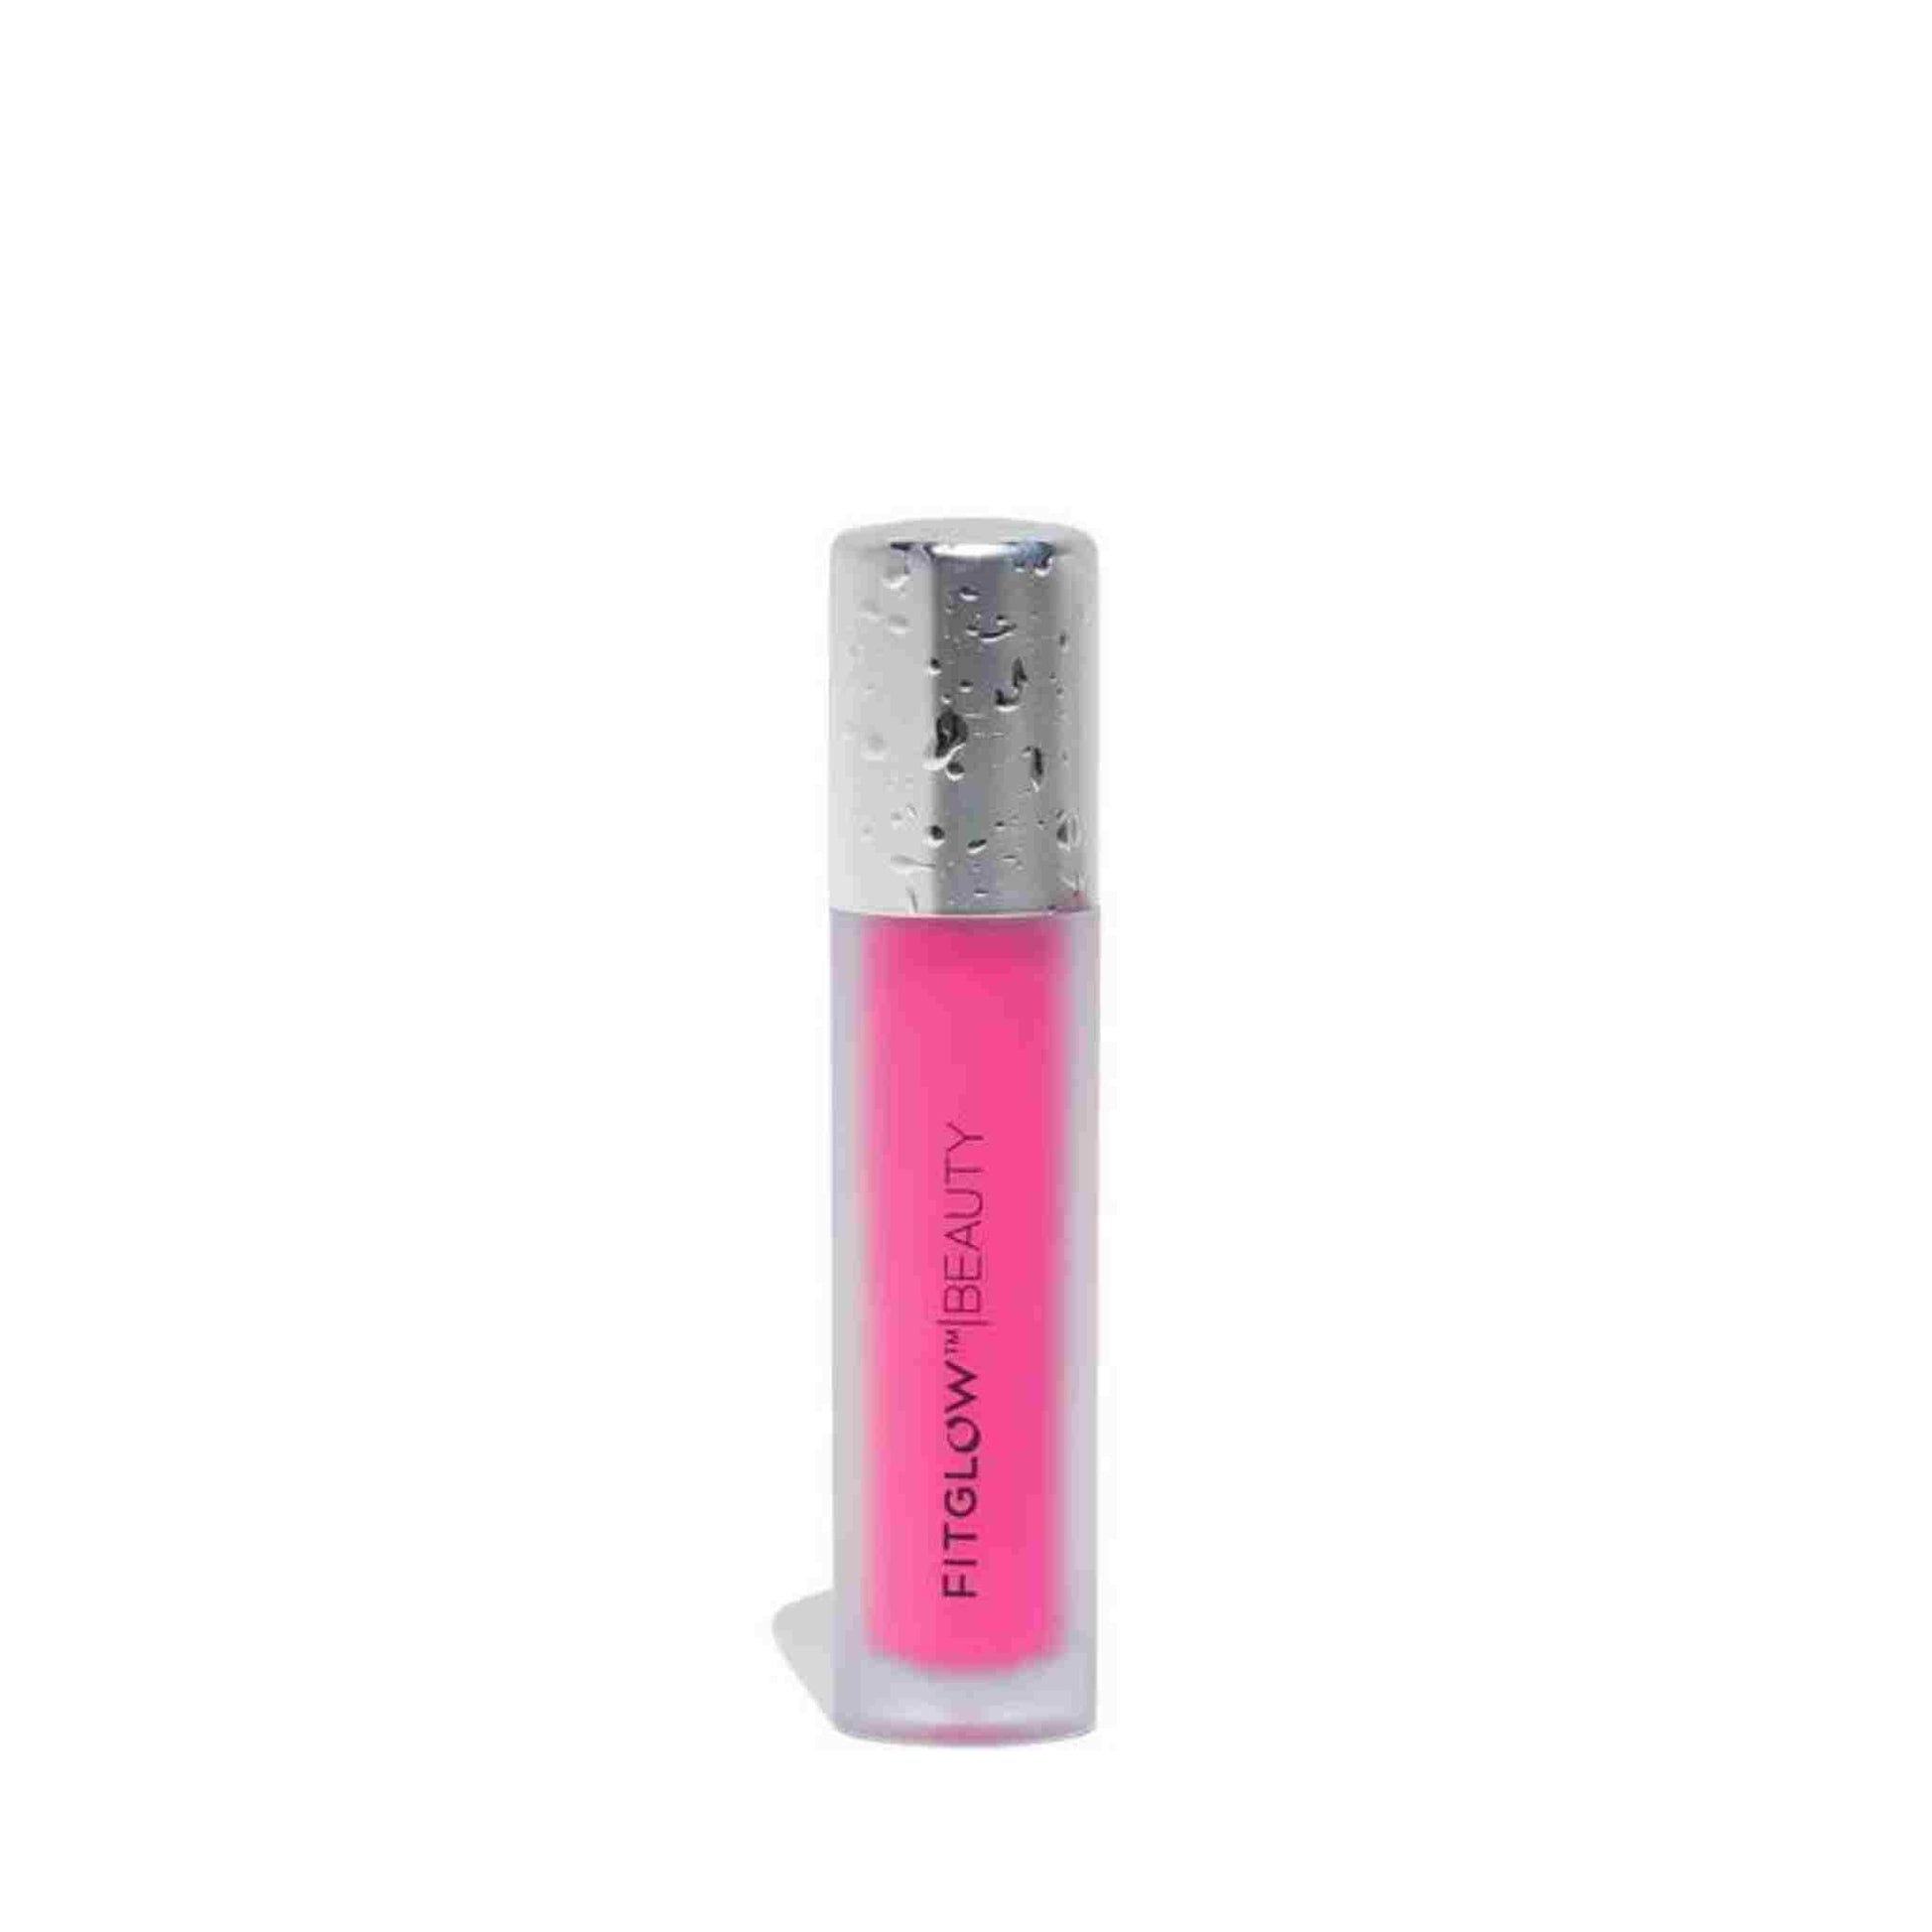 FitGlow Beauty - Fitglow Lip Colour Serum - ORESTA clean beauty simplified